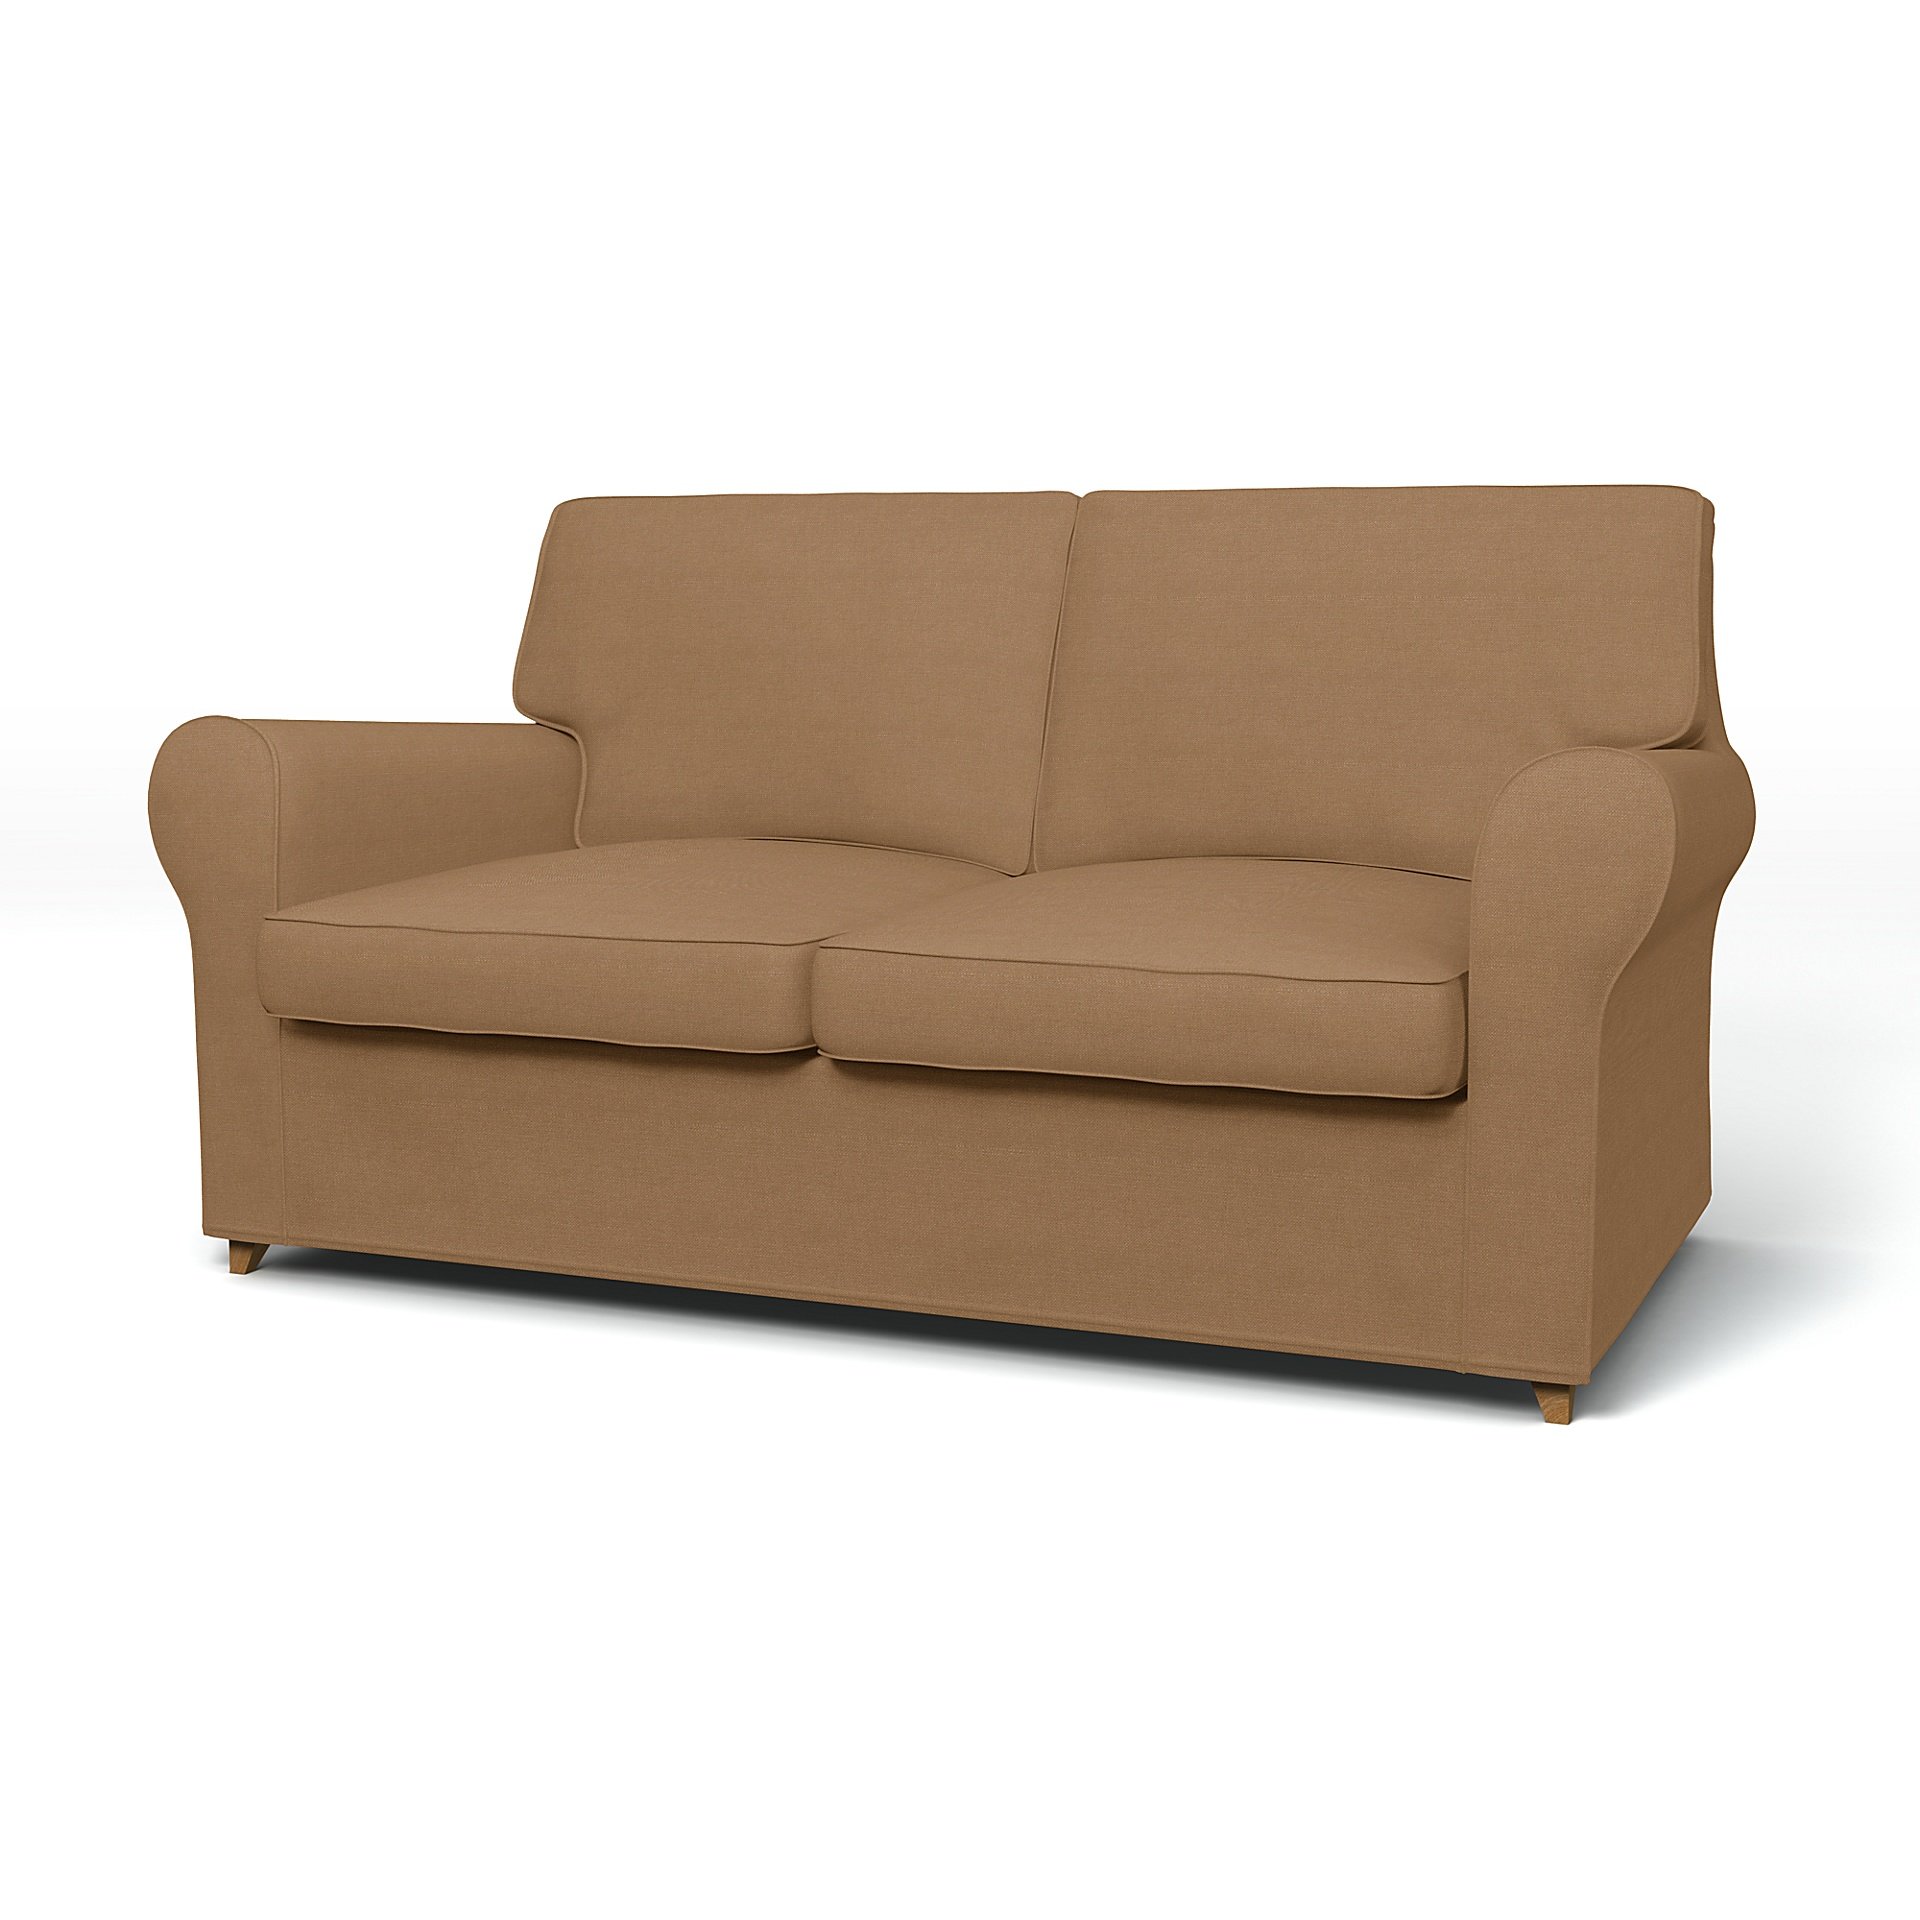 IKEA - Angby 2 Seater Sofa Cover, Nougat, Linen - Bemz